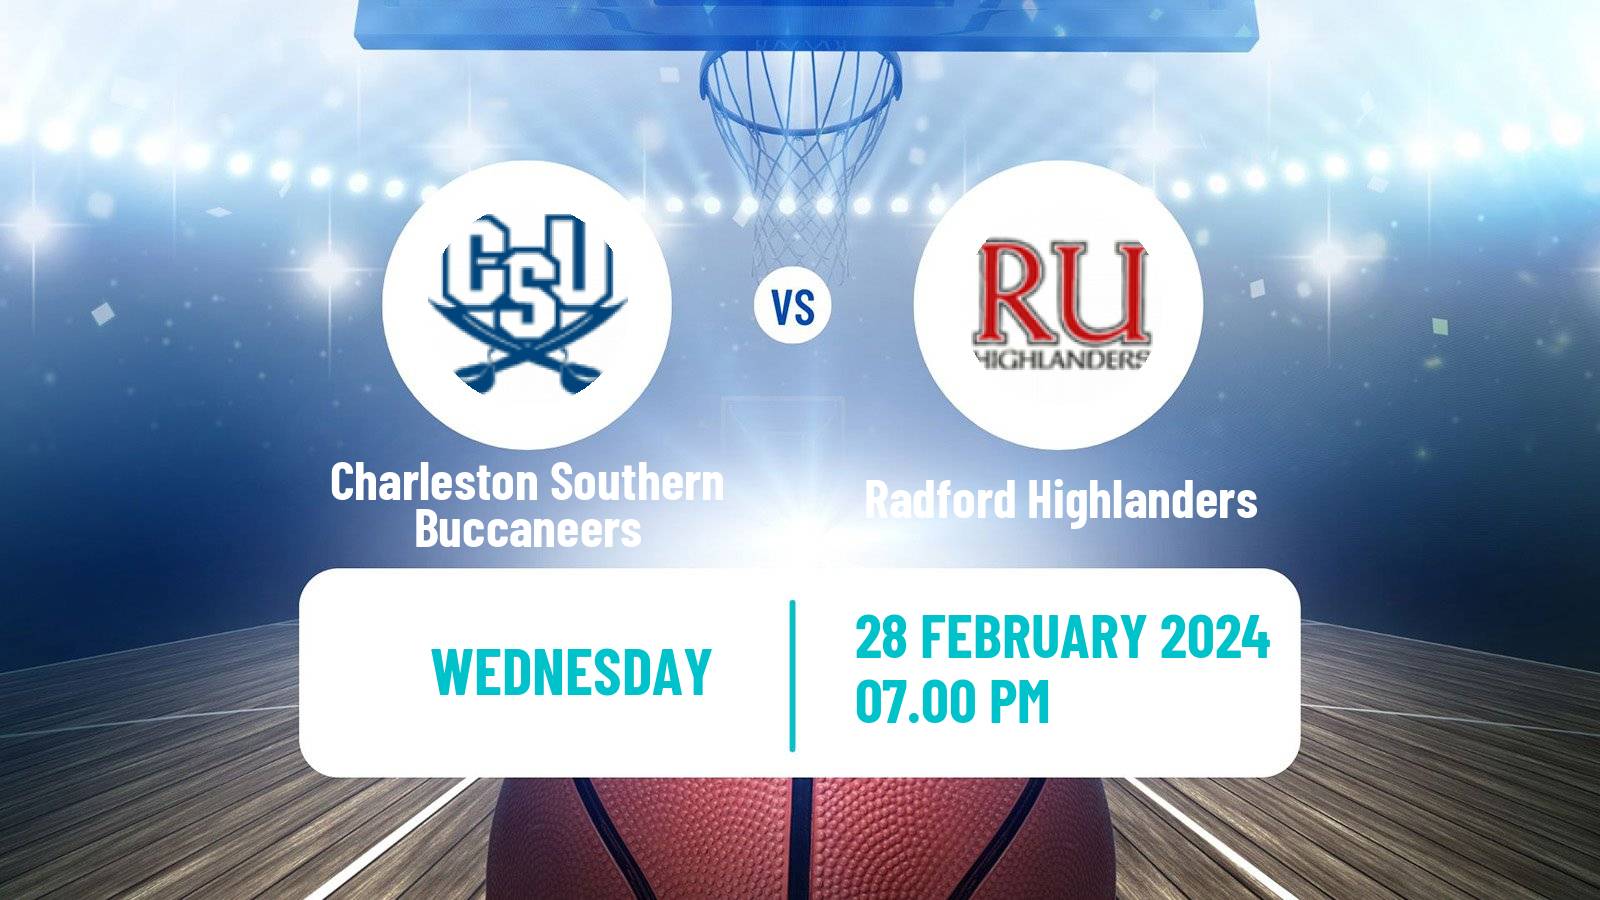 Basketball NCAA College Basketball Charleston Southern Buccaneers - Radford Highlanders